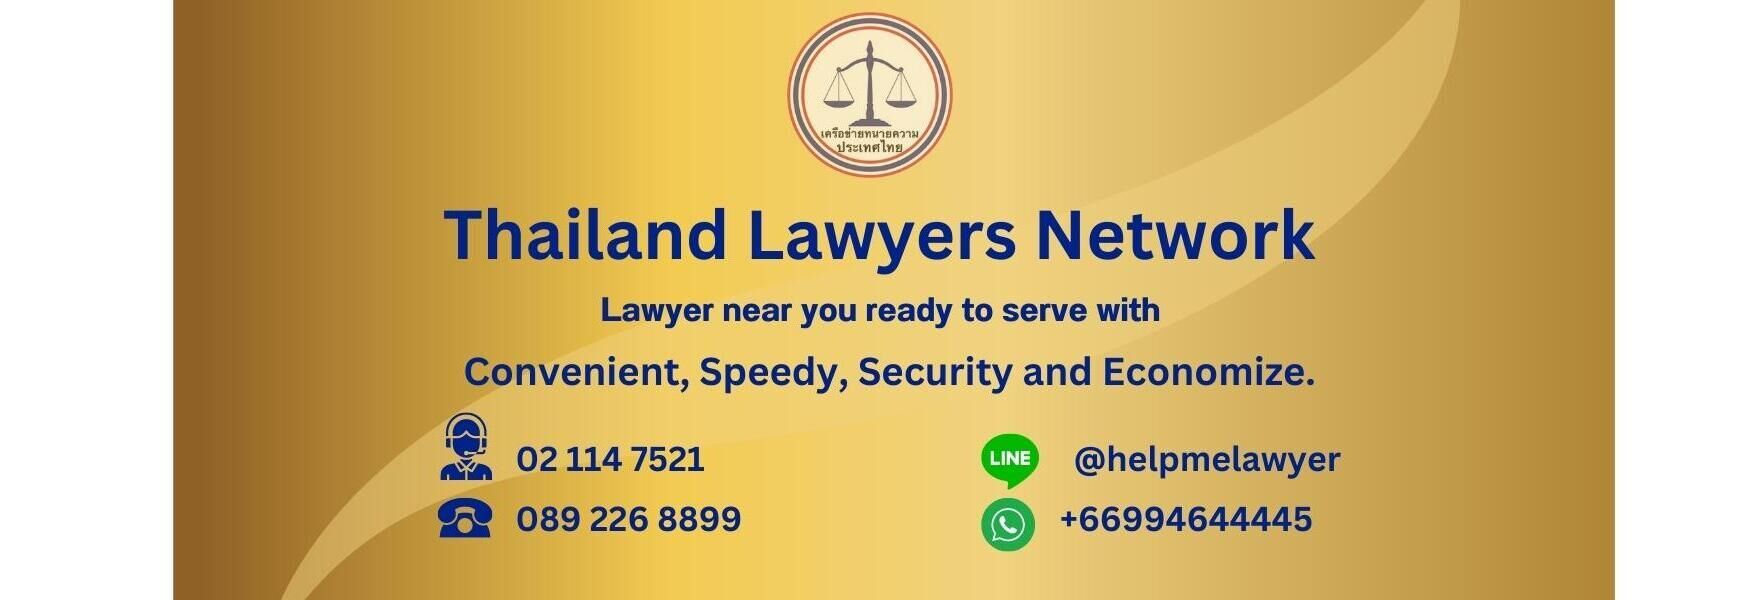 Thailand Lawyer Network